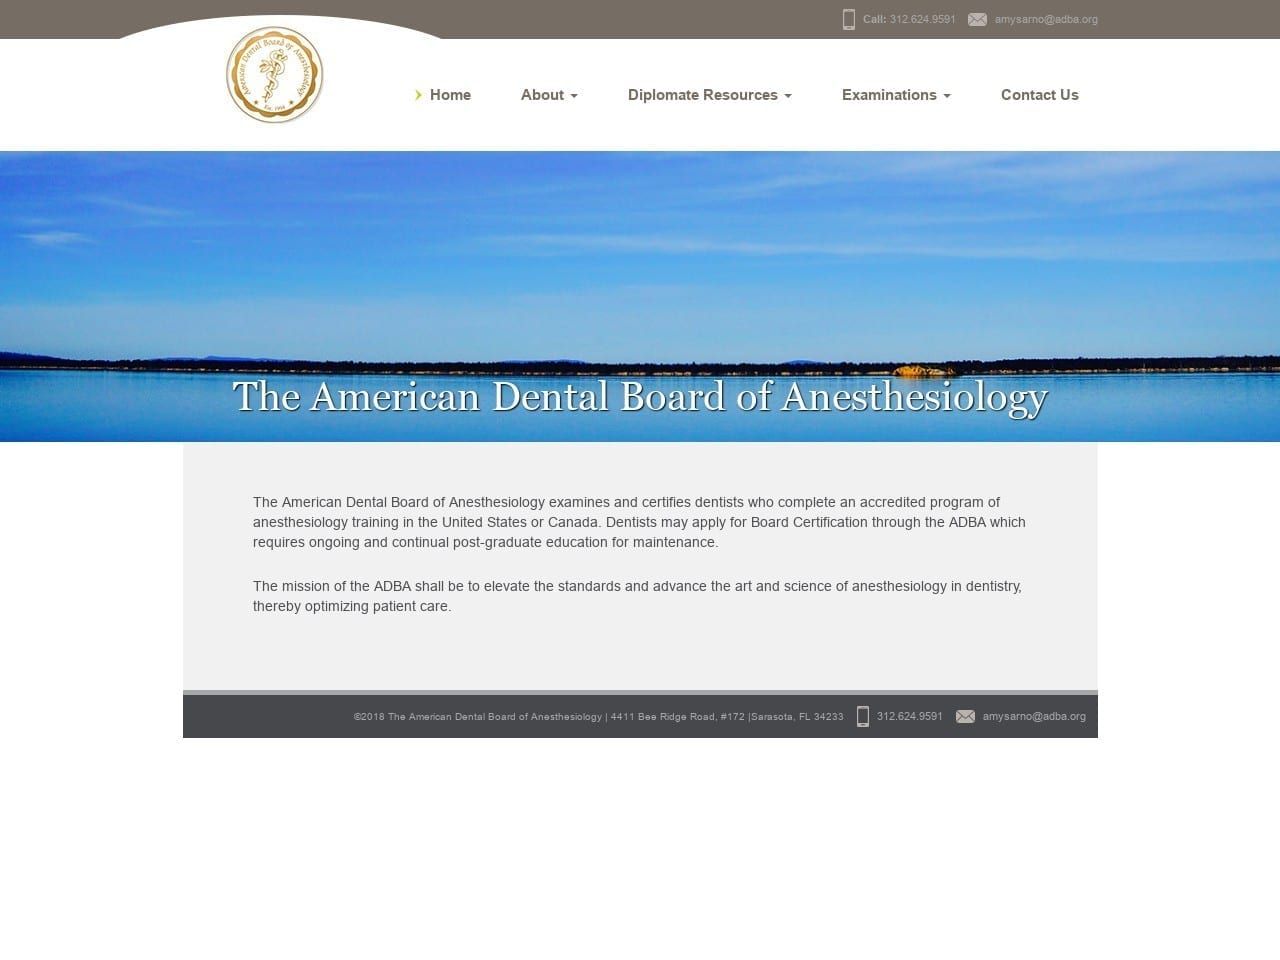 American Dental Board Anesthesiology Website Screenshot from adba.org